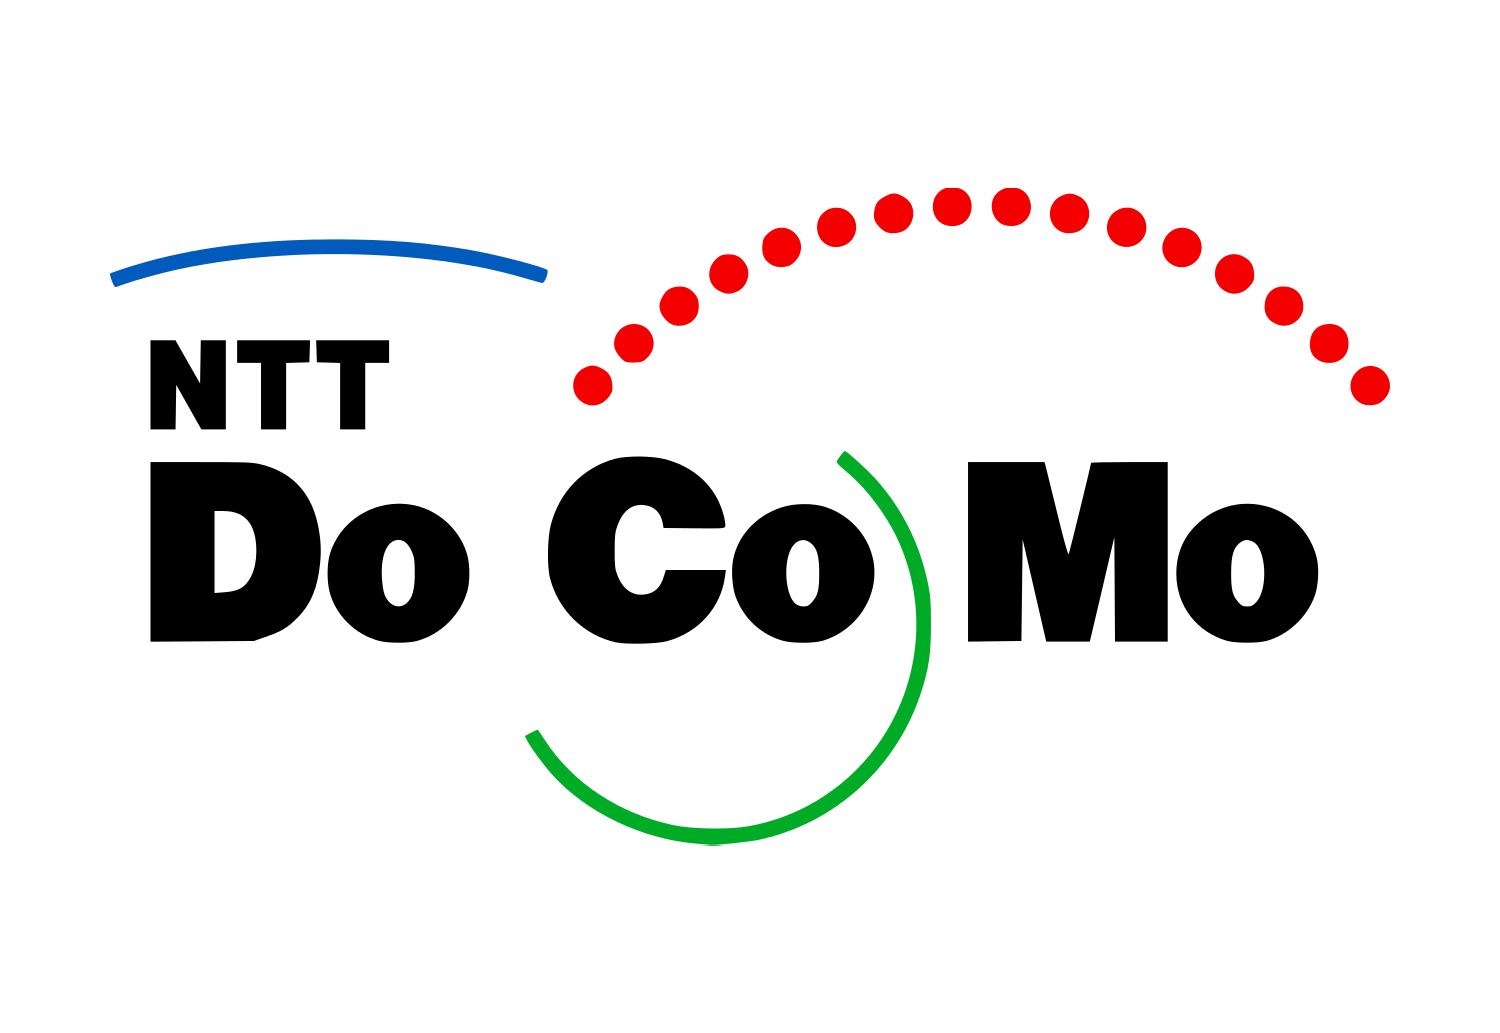 DOCOMO Logo - NTT DoCoMo logo